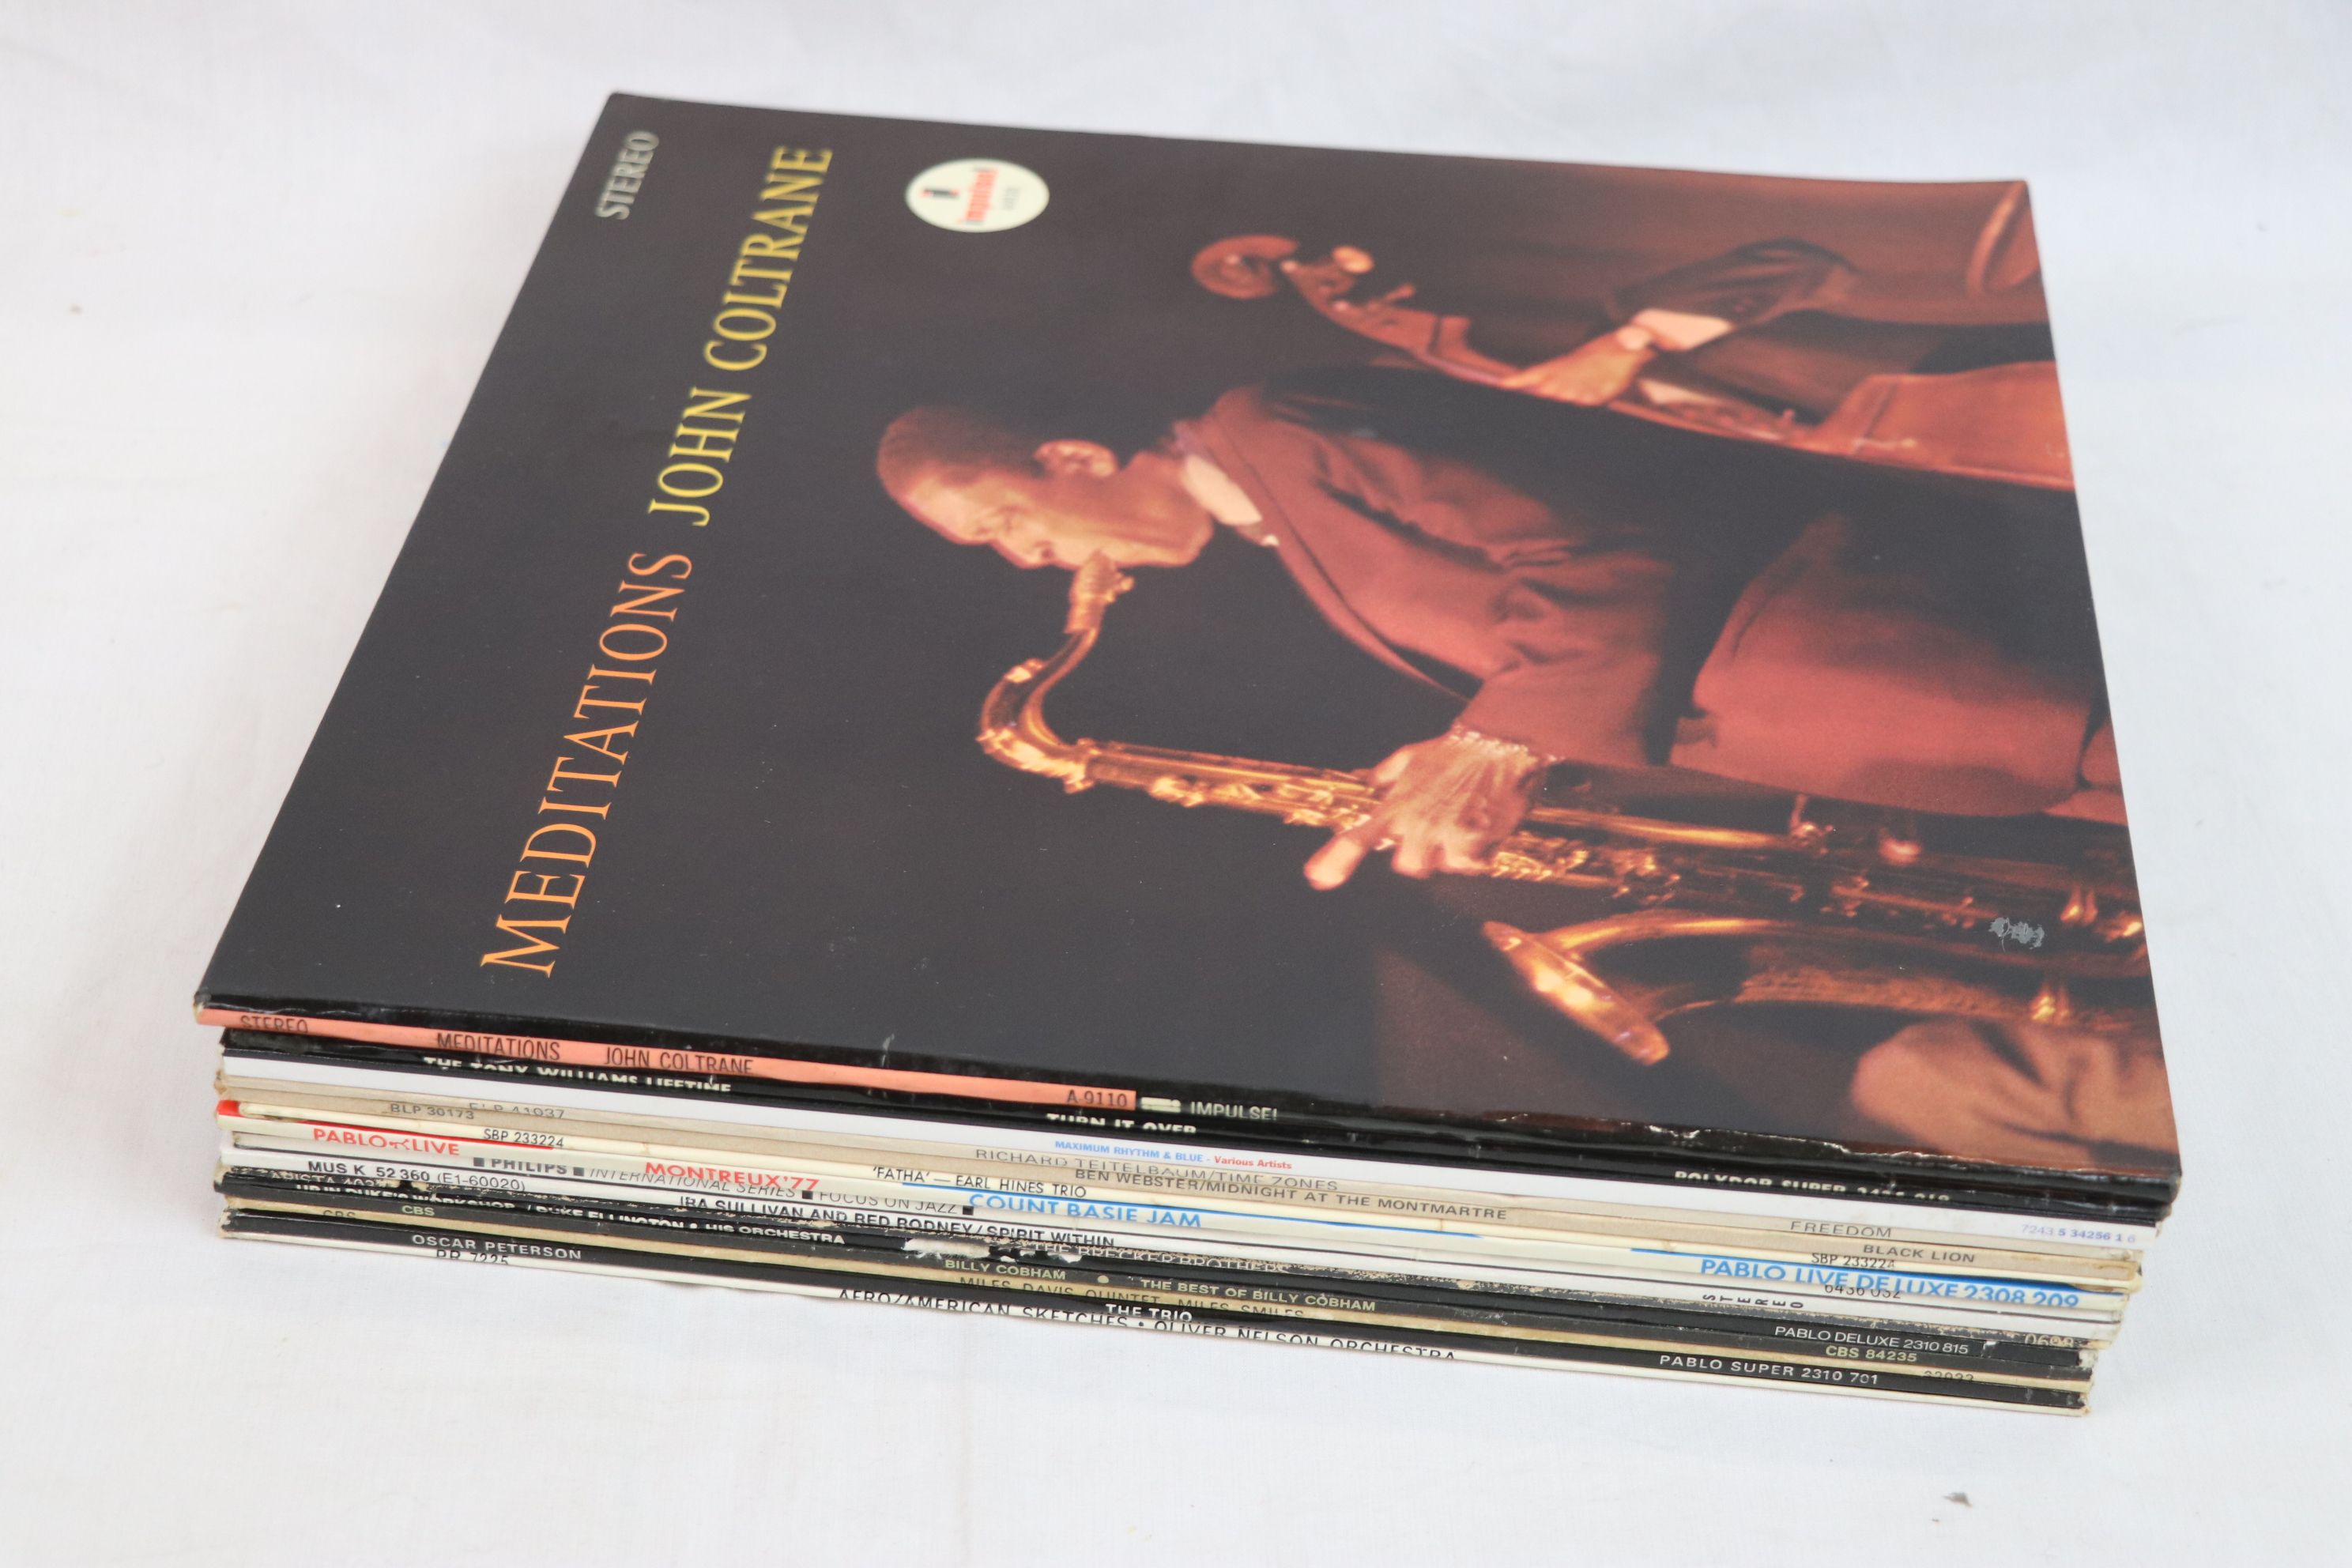 Vinyl - Collection of 15 x Jazz vinyl LP's to include Meditations - John Coltrane (Impulse A-